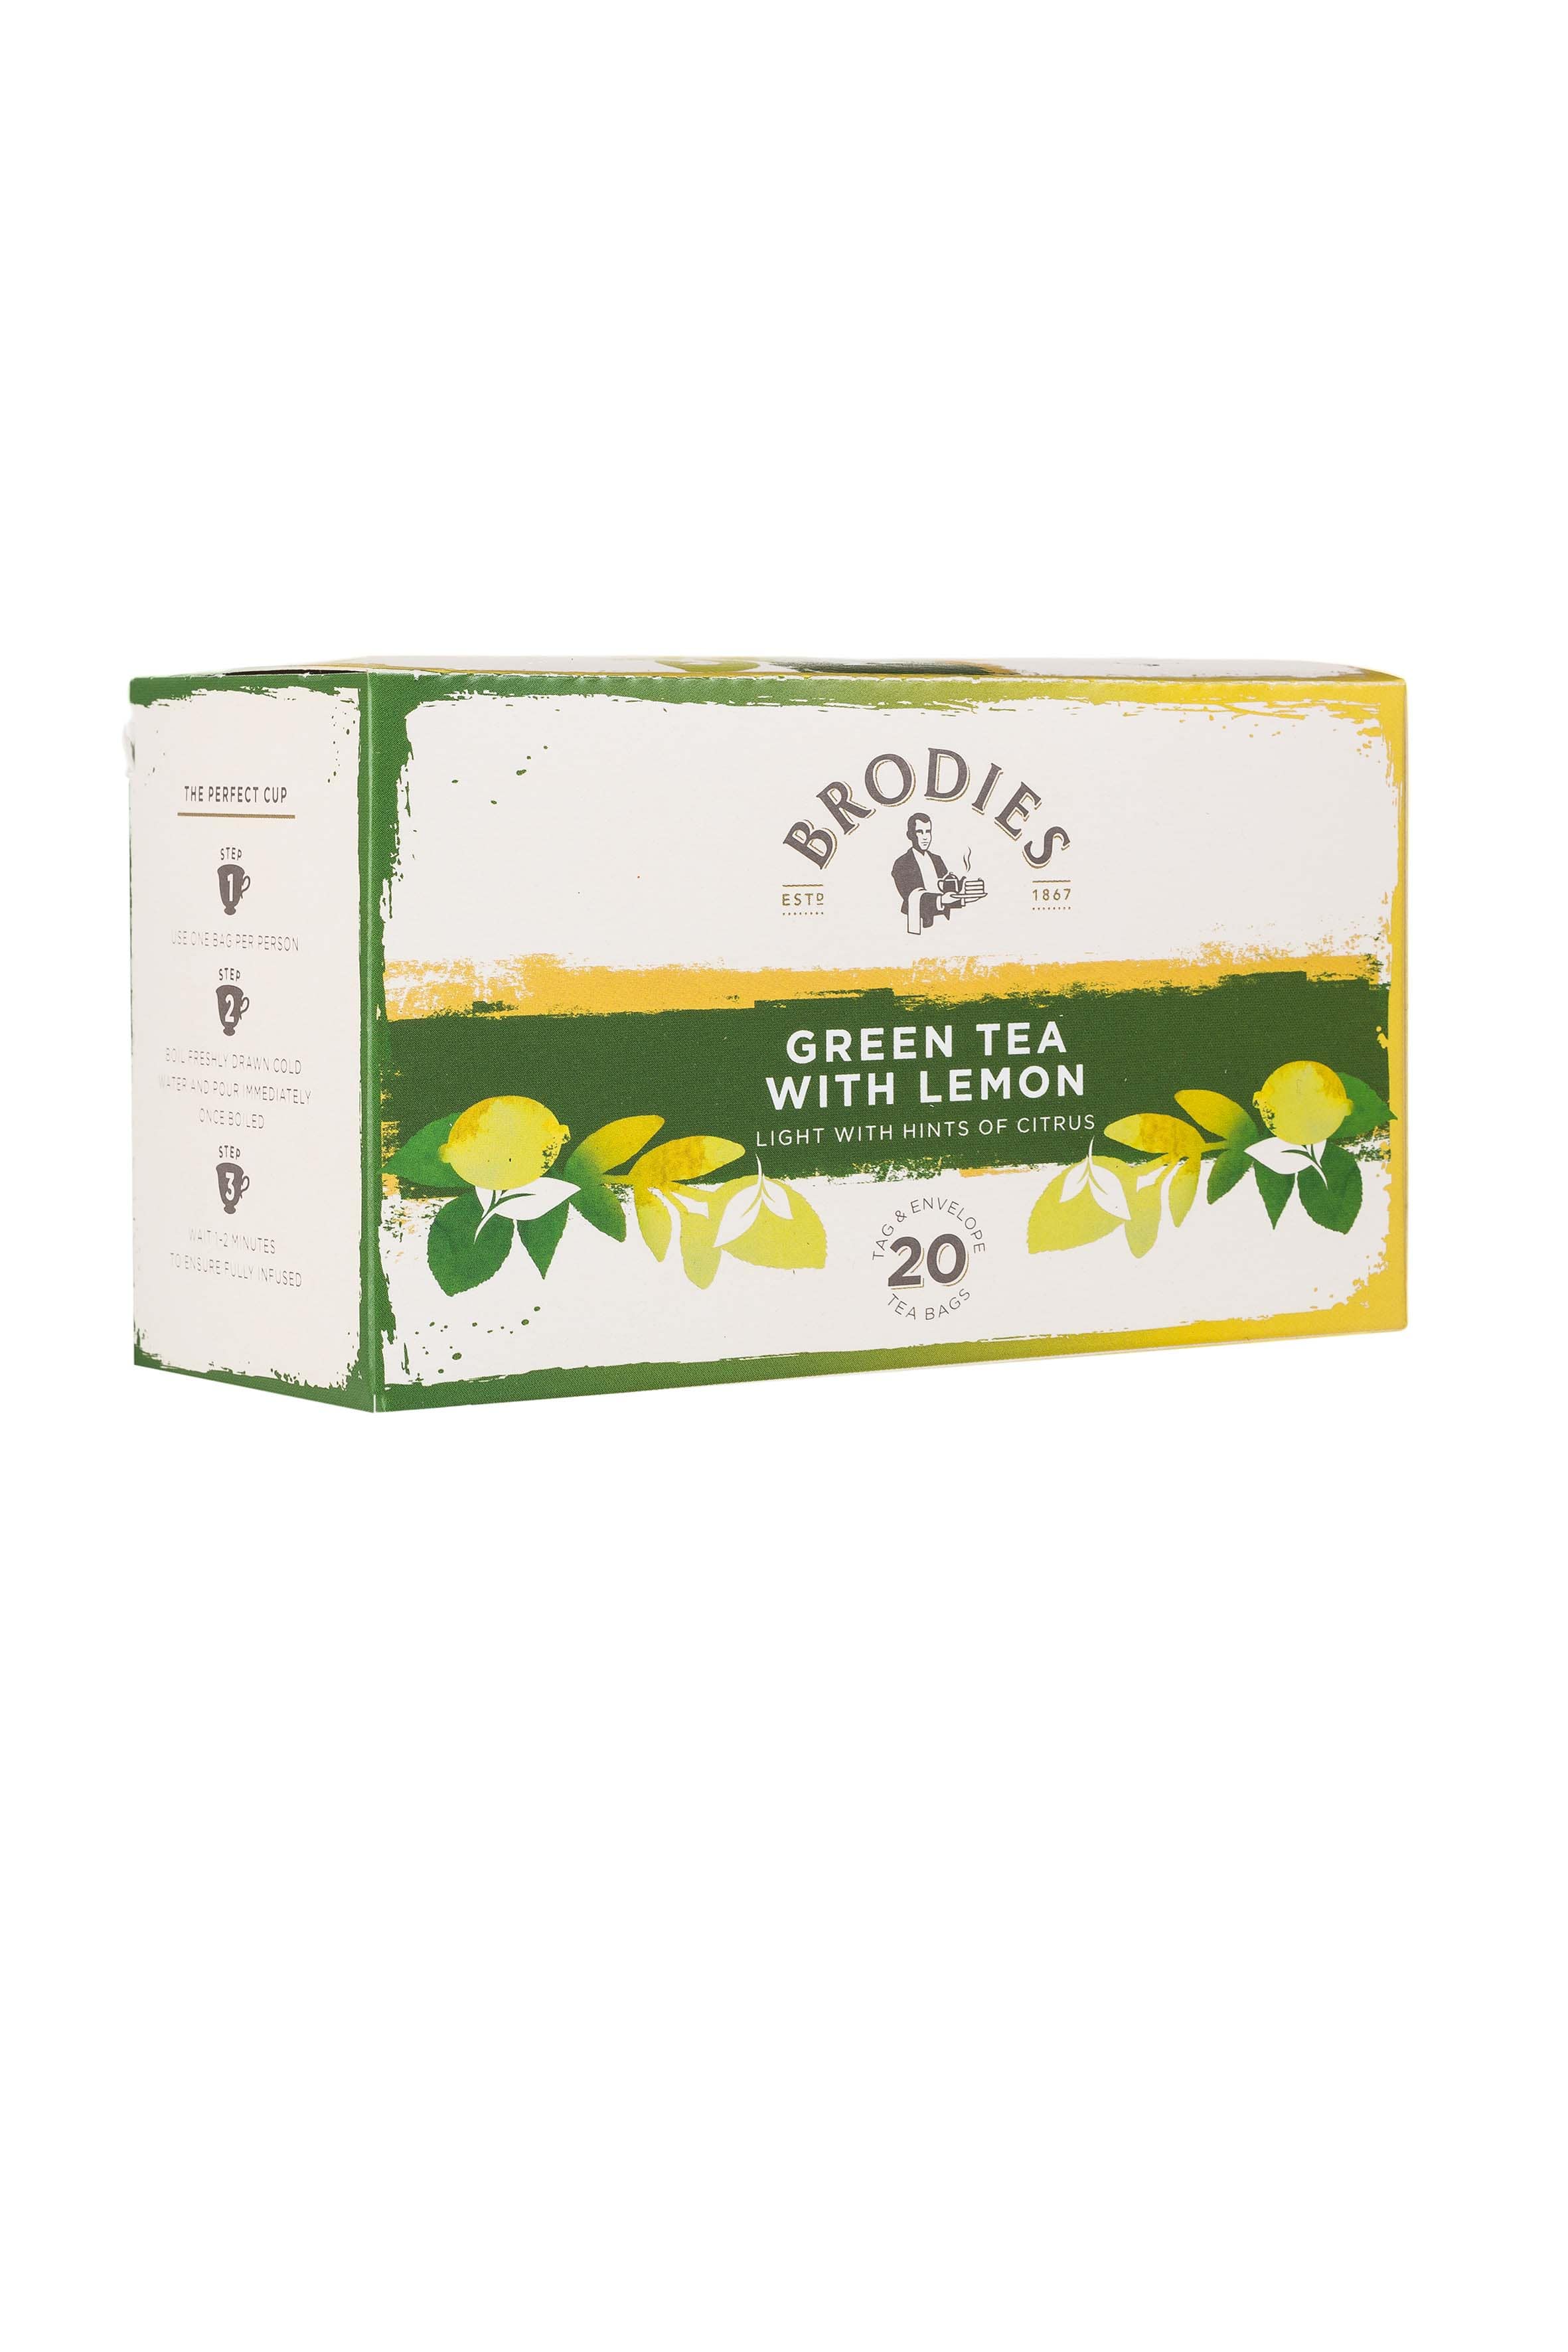 BRODIES - GREEN TEA WITH LEMON TEA